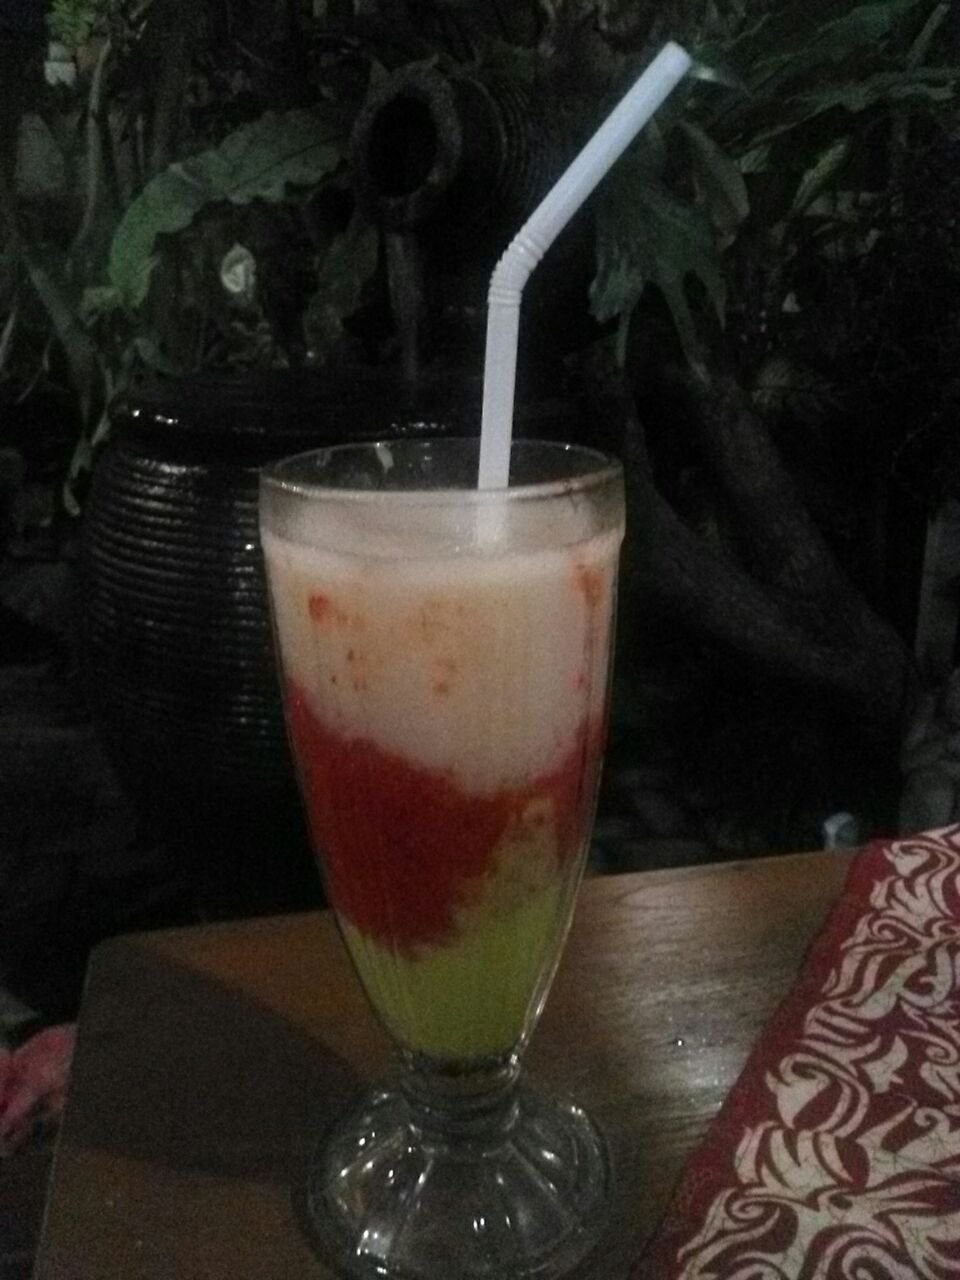 Cafe Bali